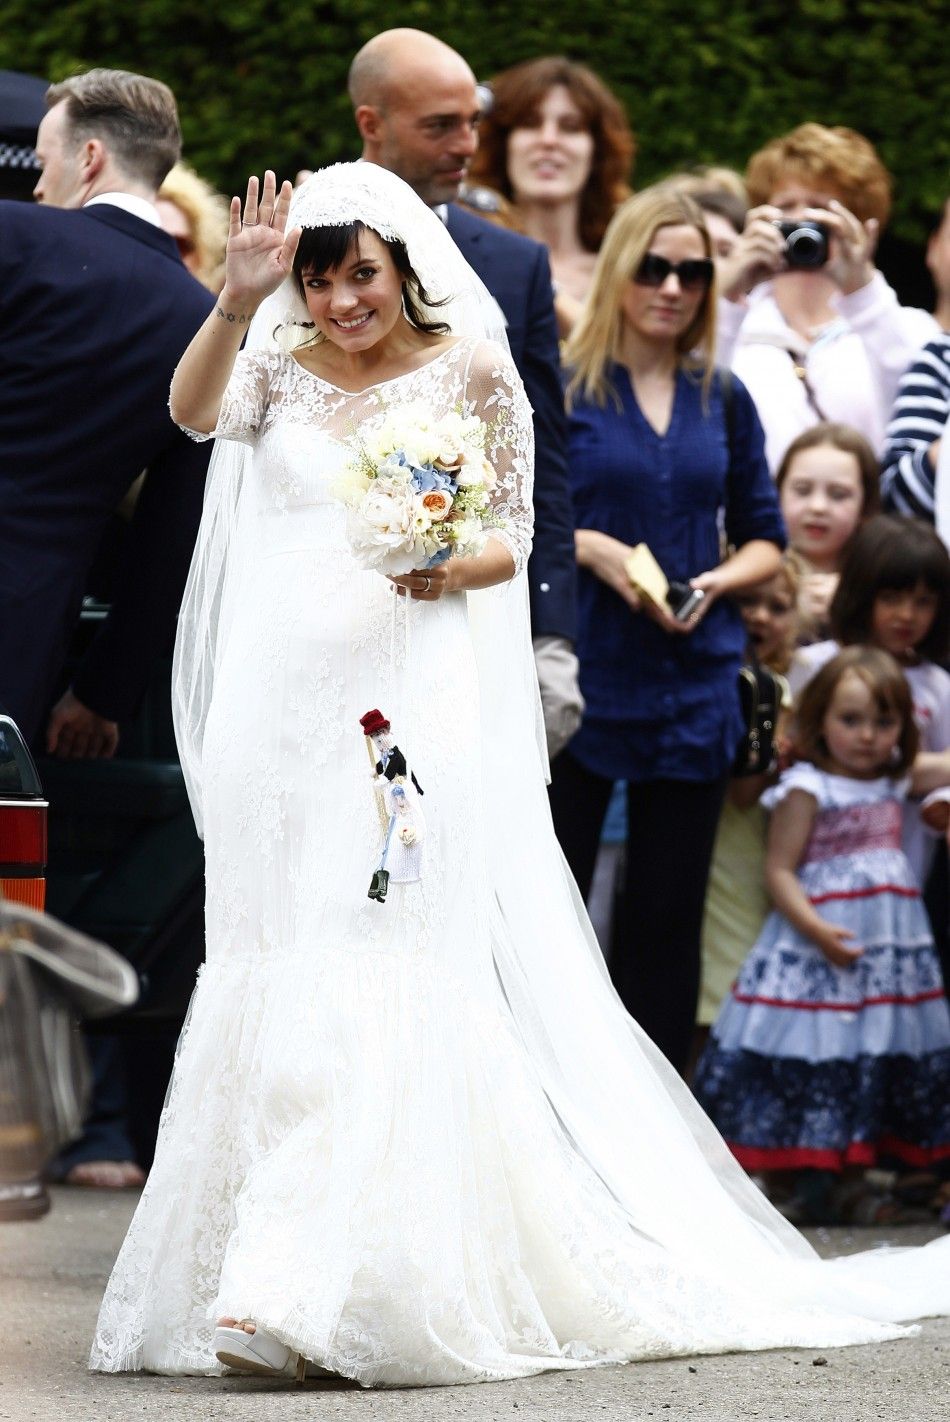 Lily Allen's shock wedding dress confession :: Fashion news